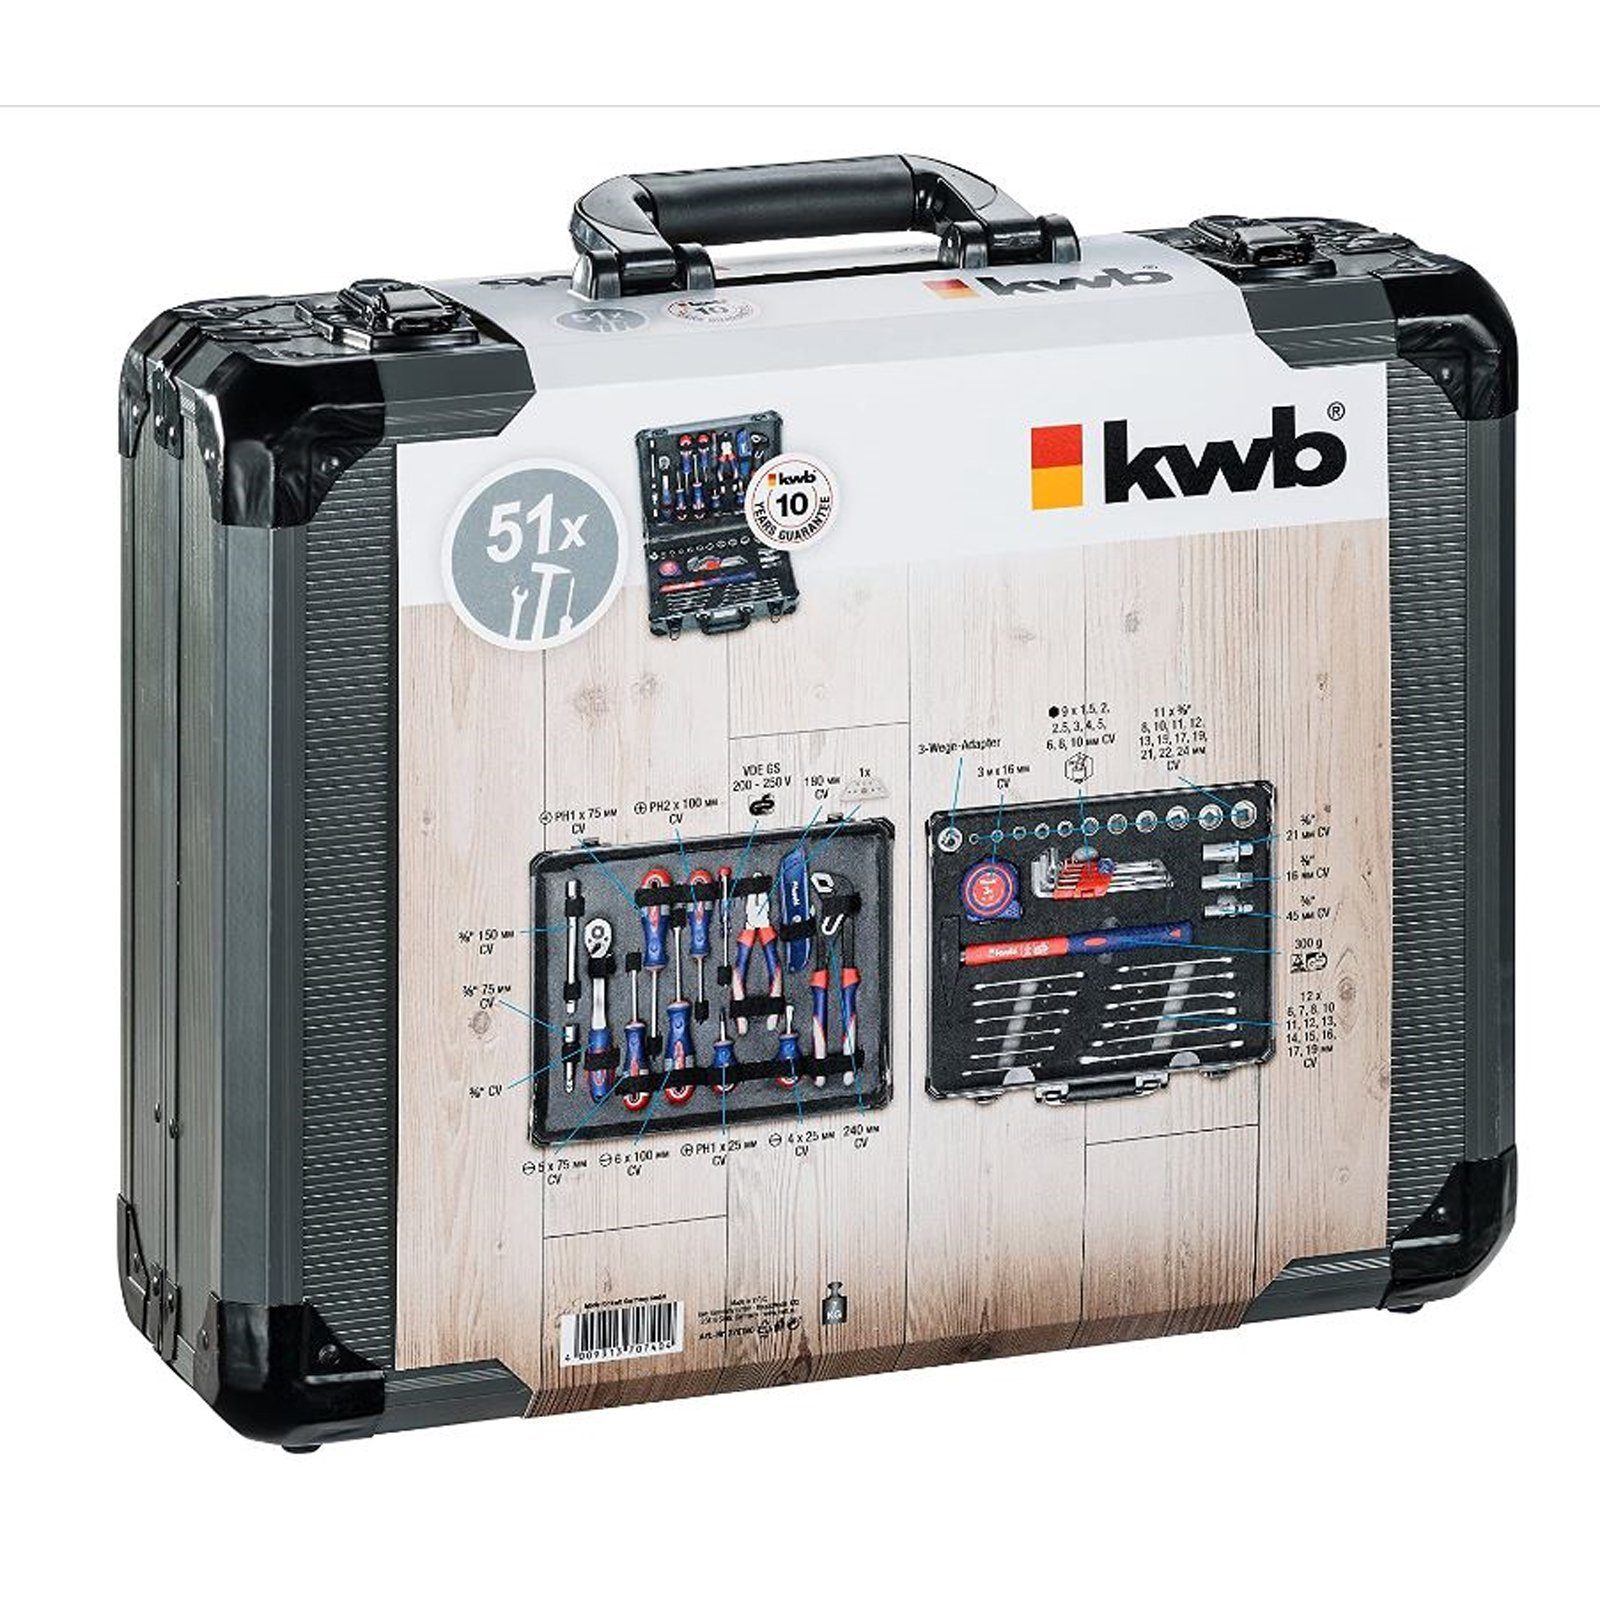 kwb Werkzeugset kwb Werkzeug-Koffer inkl. Werkzeug-Set, gefüllt, robust, 51-teilig, (Set)